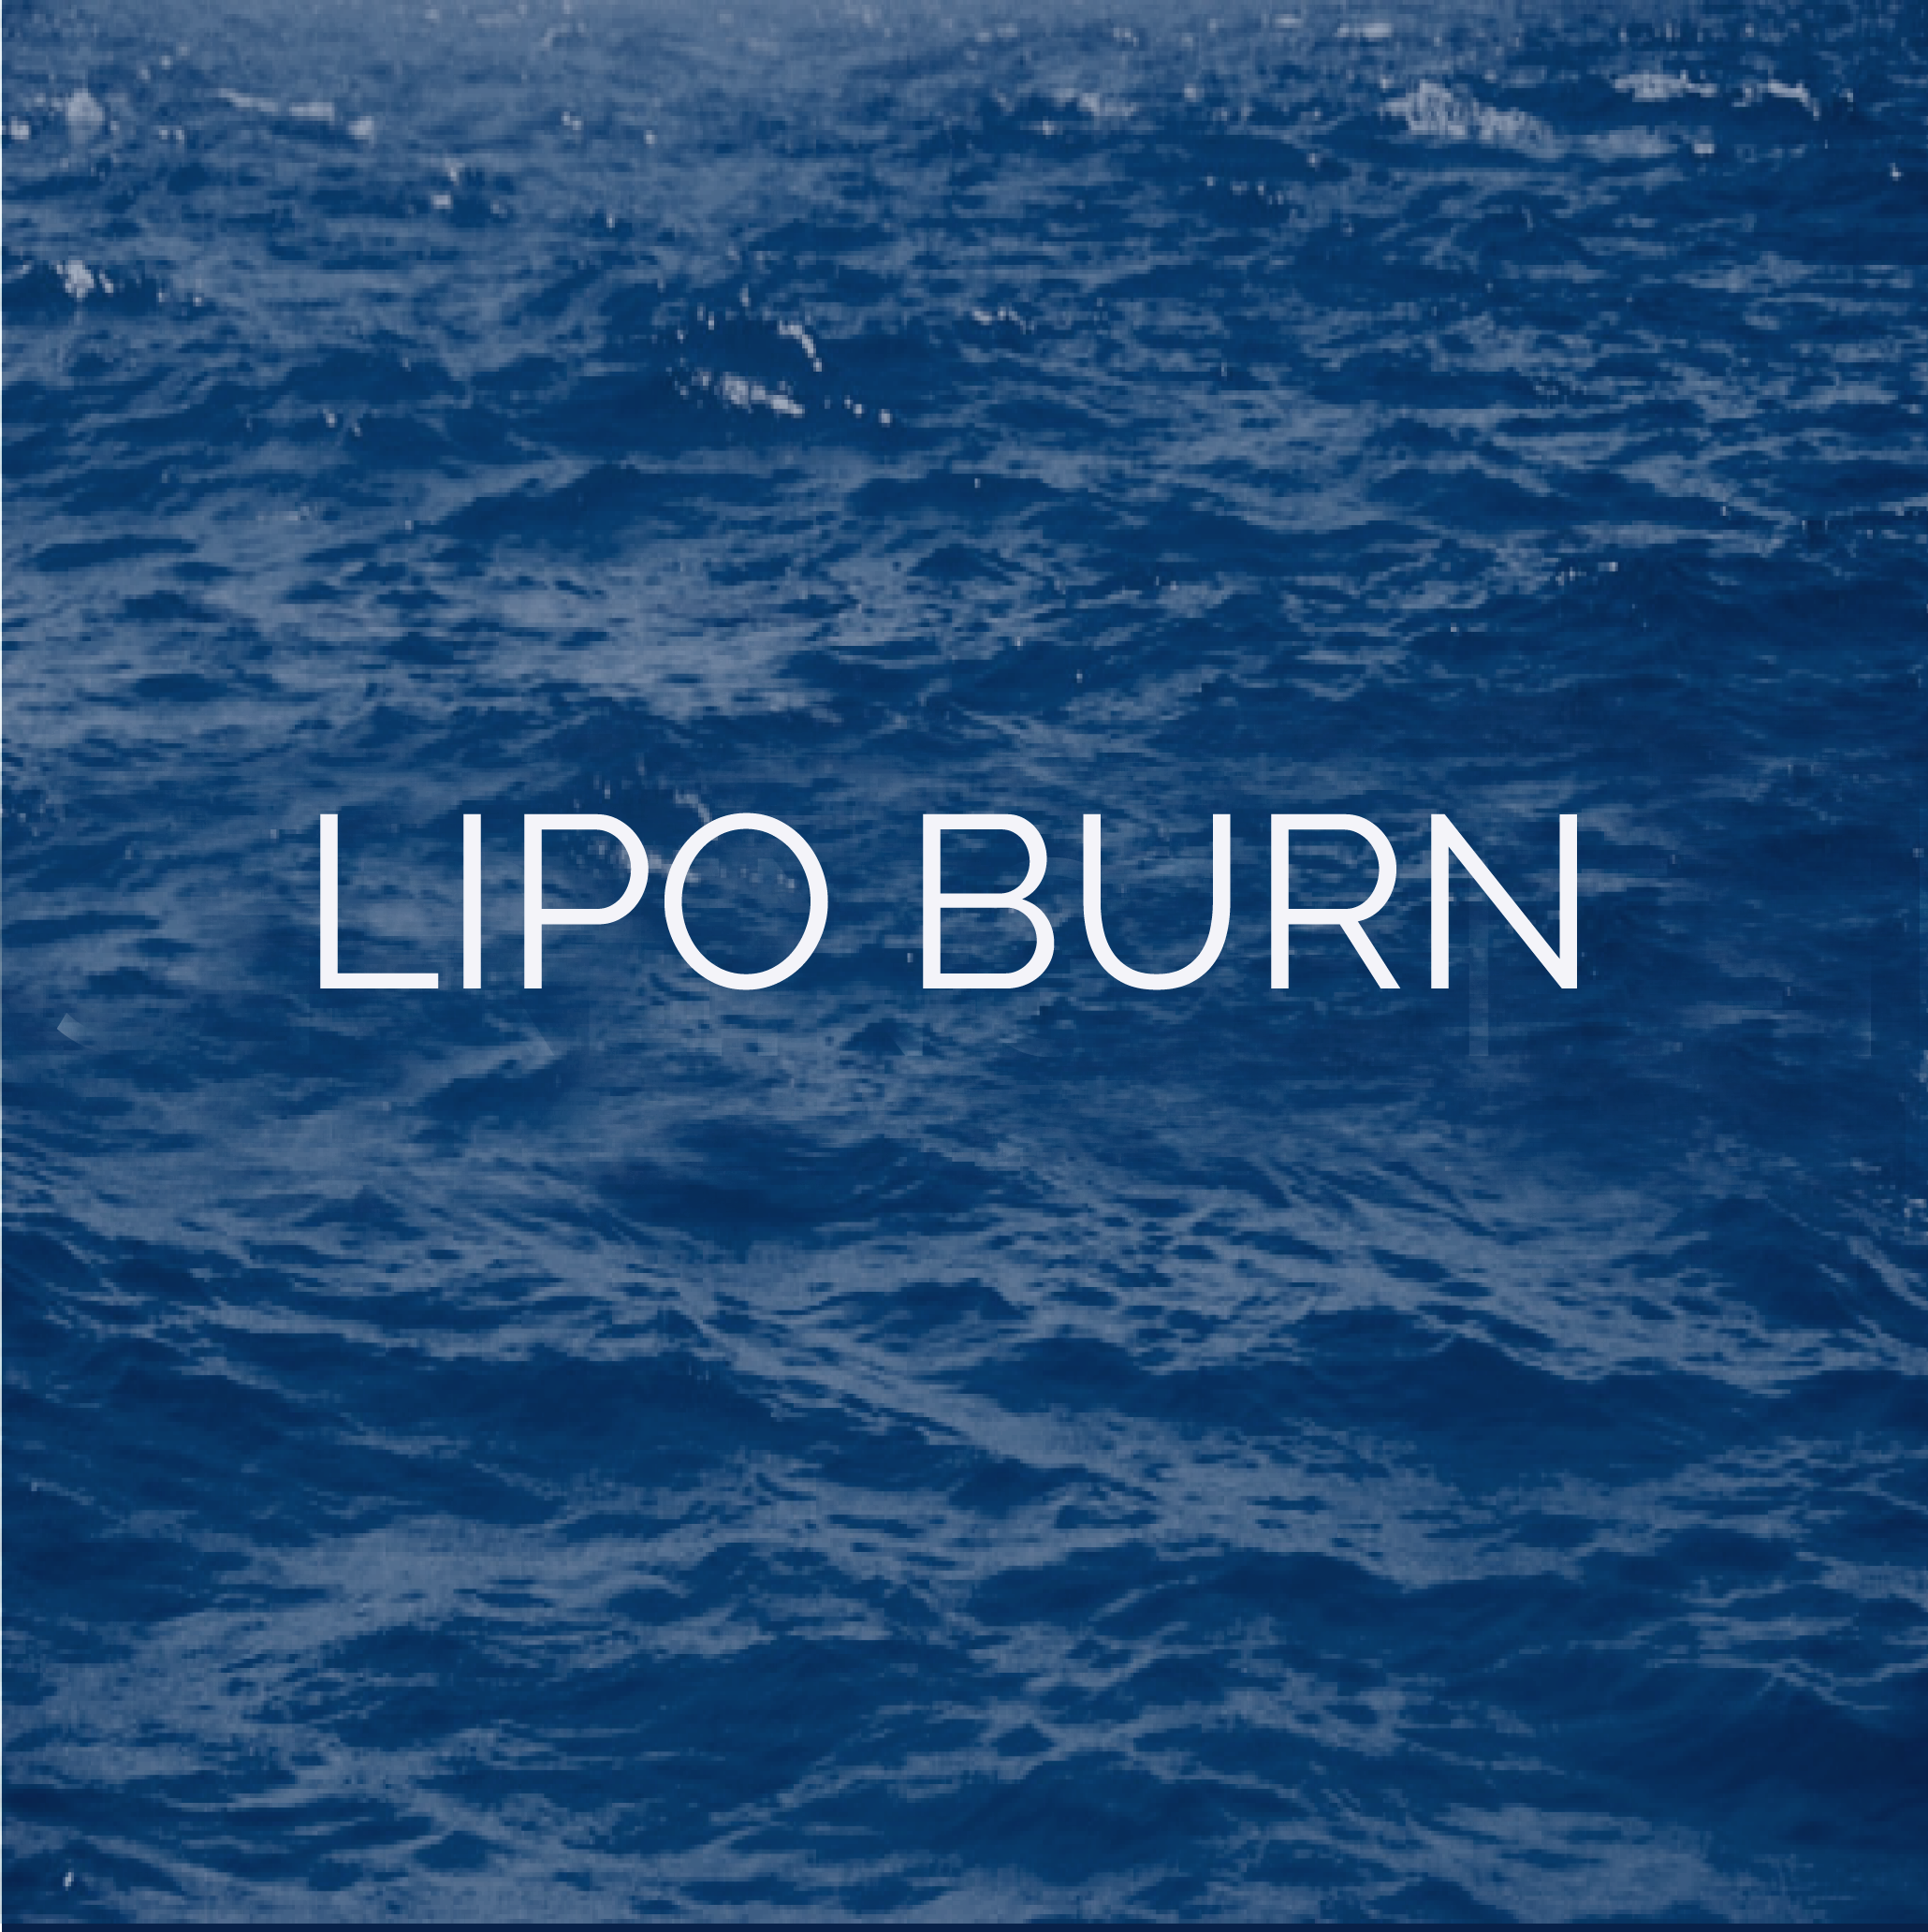 An icon representing Lipo-Burn